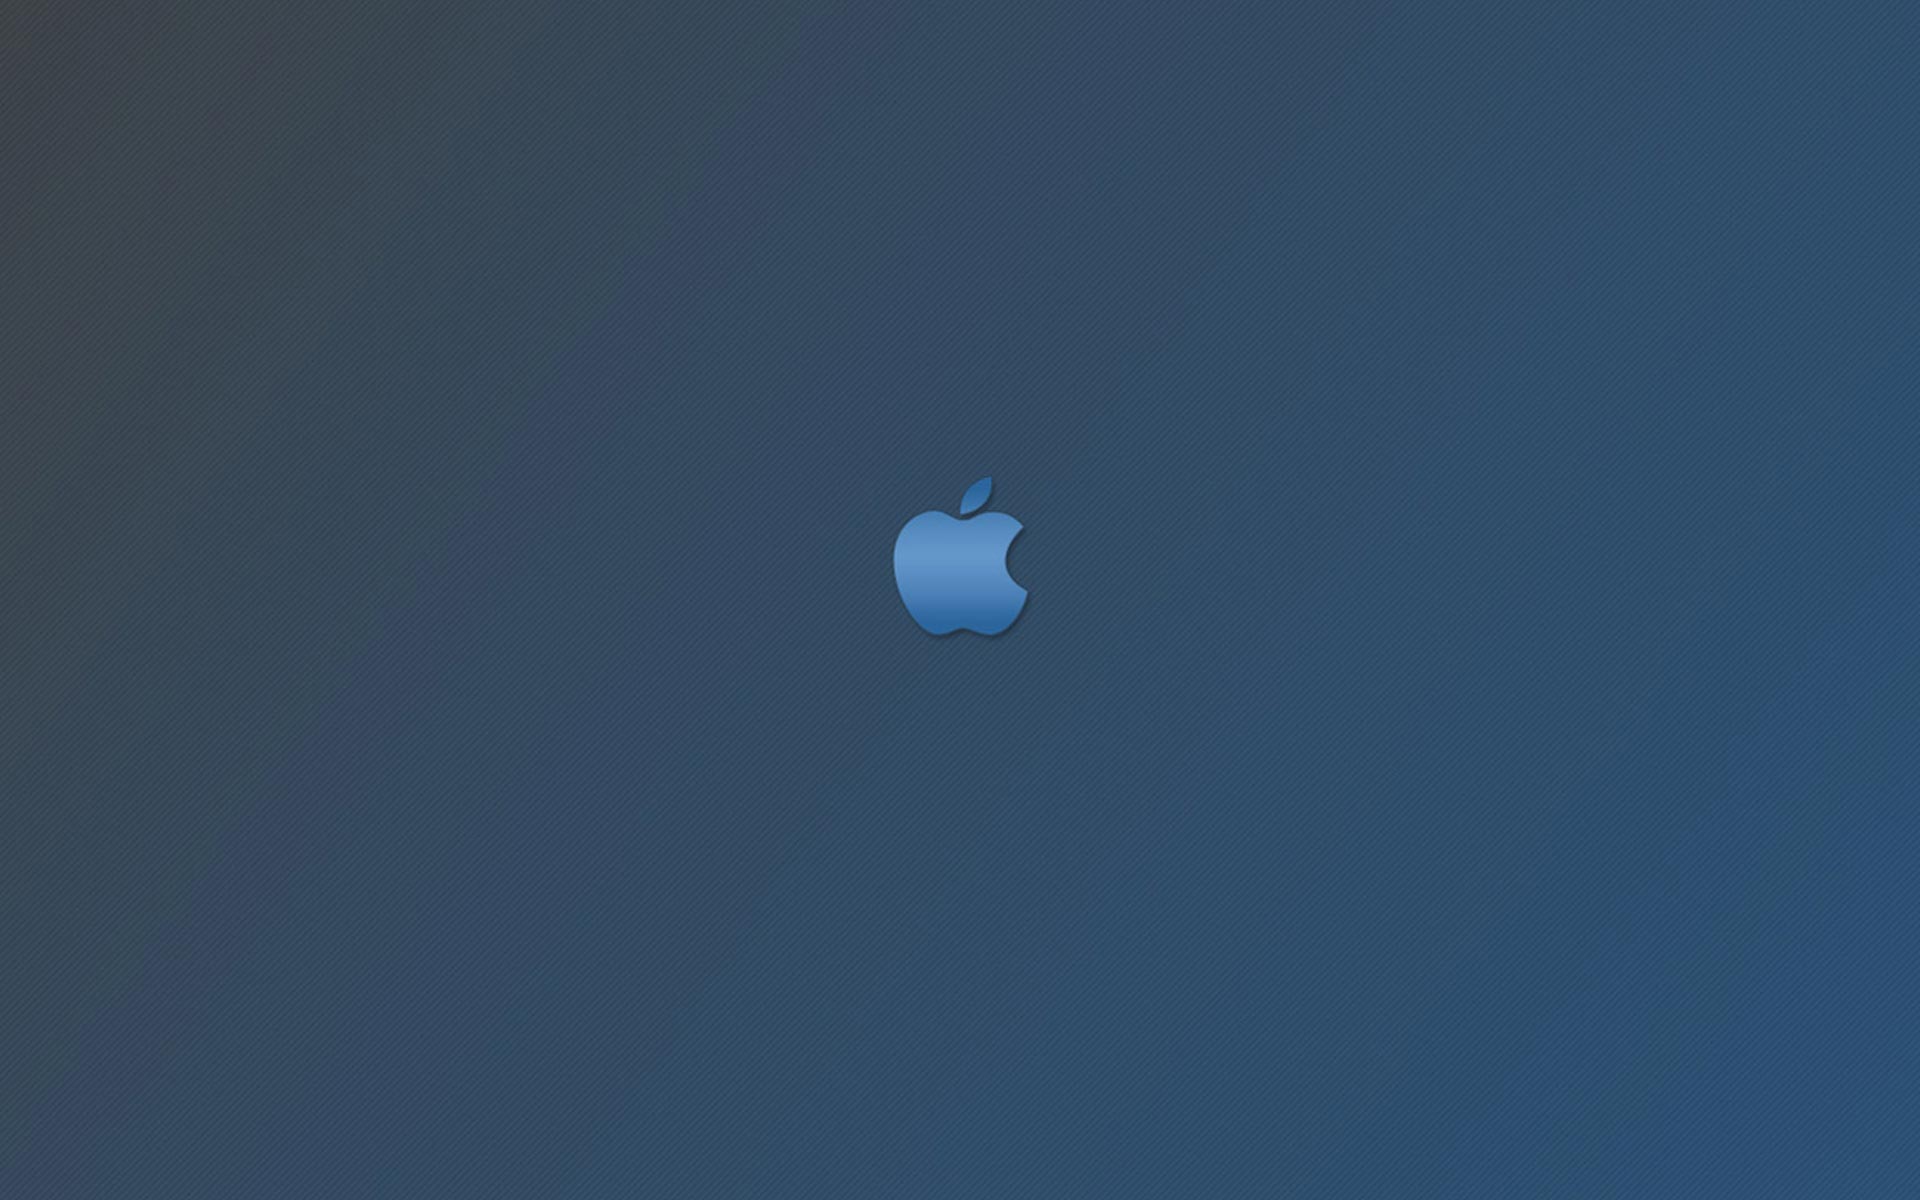 Apple Mac Wallpapers Free - Kemecer.com